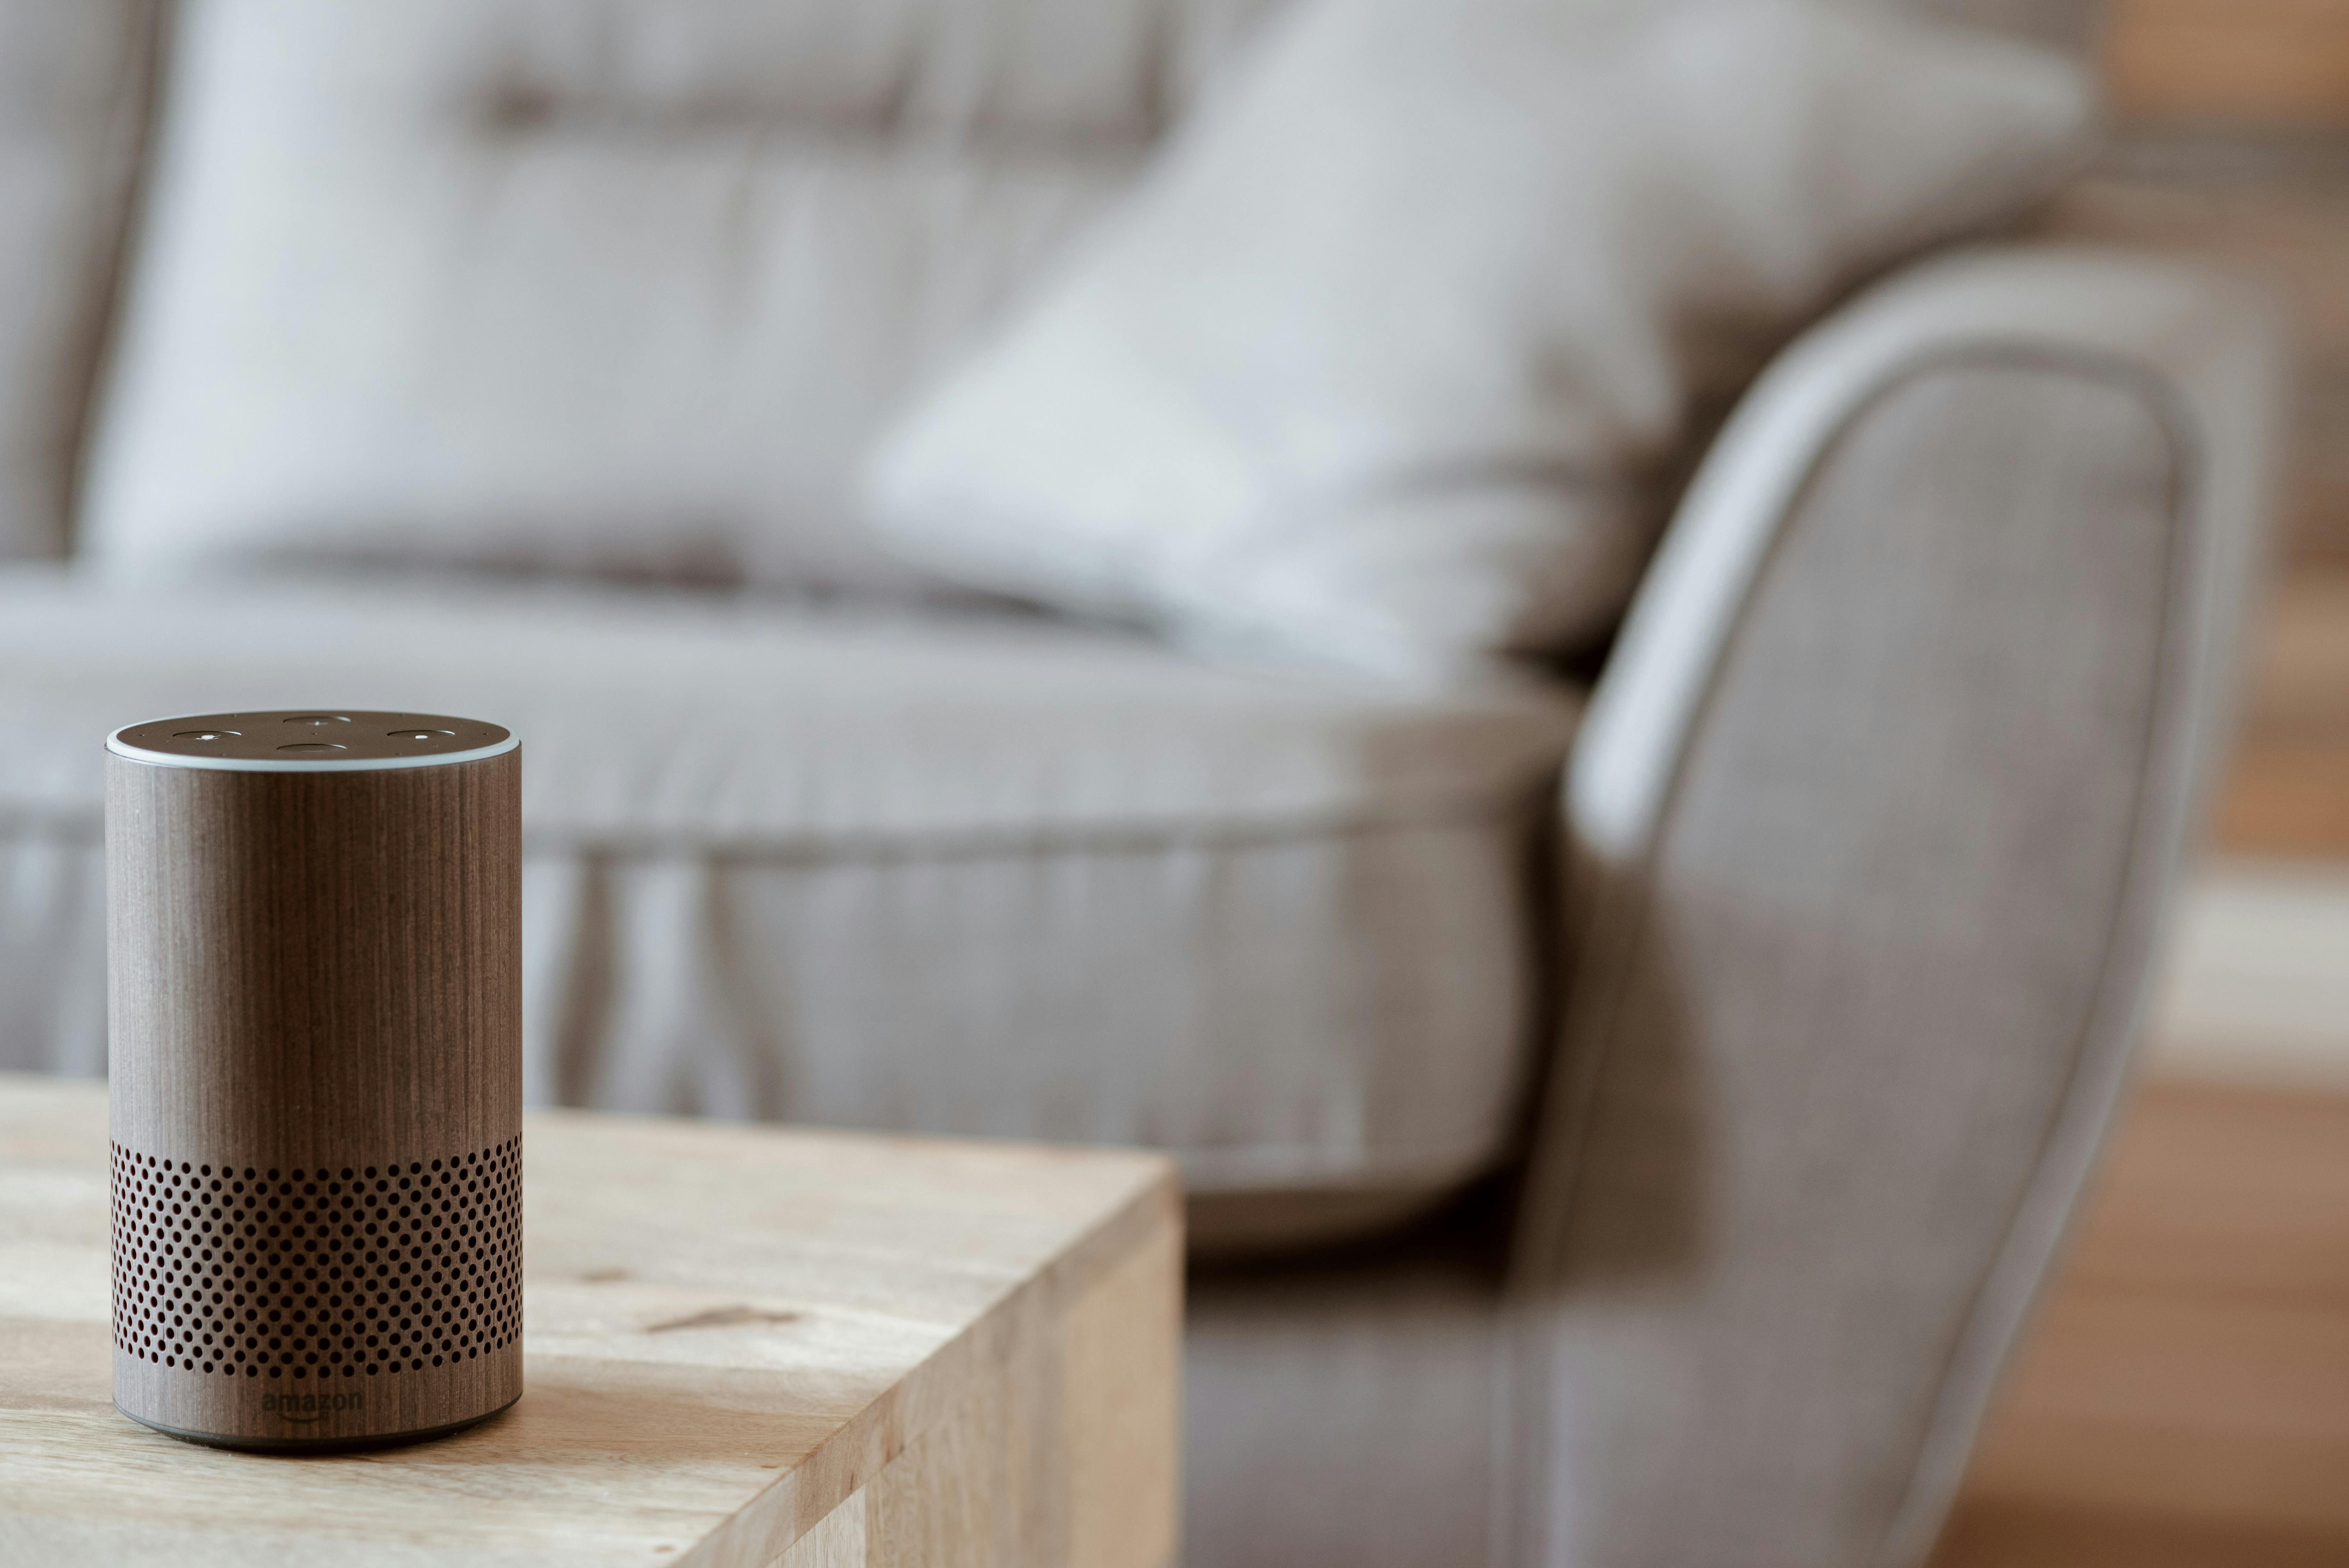 Home Automation And Alexa: Integrating Amazon Alexa Into Your Smart Home. Setting up Amazon Alexa